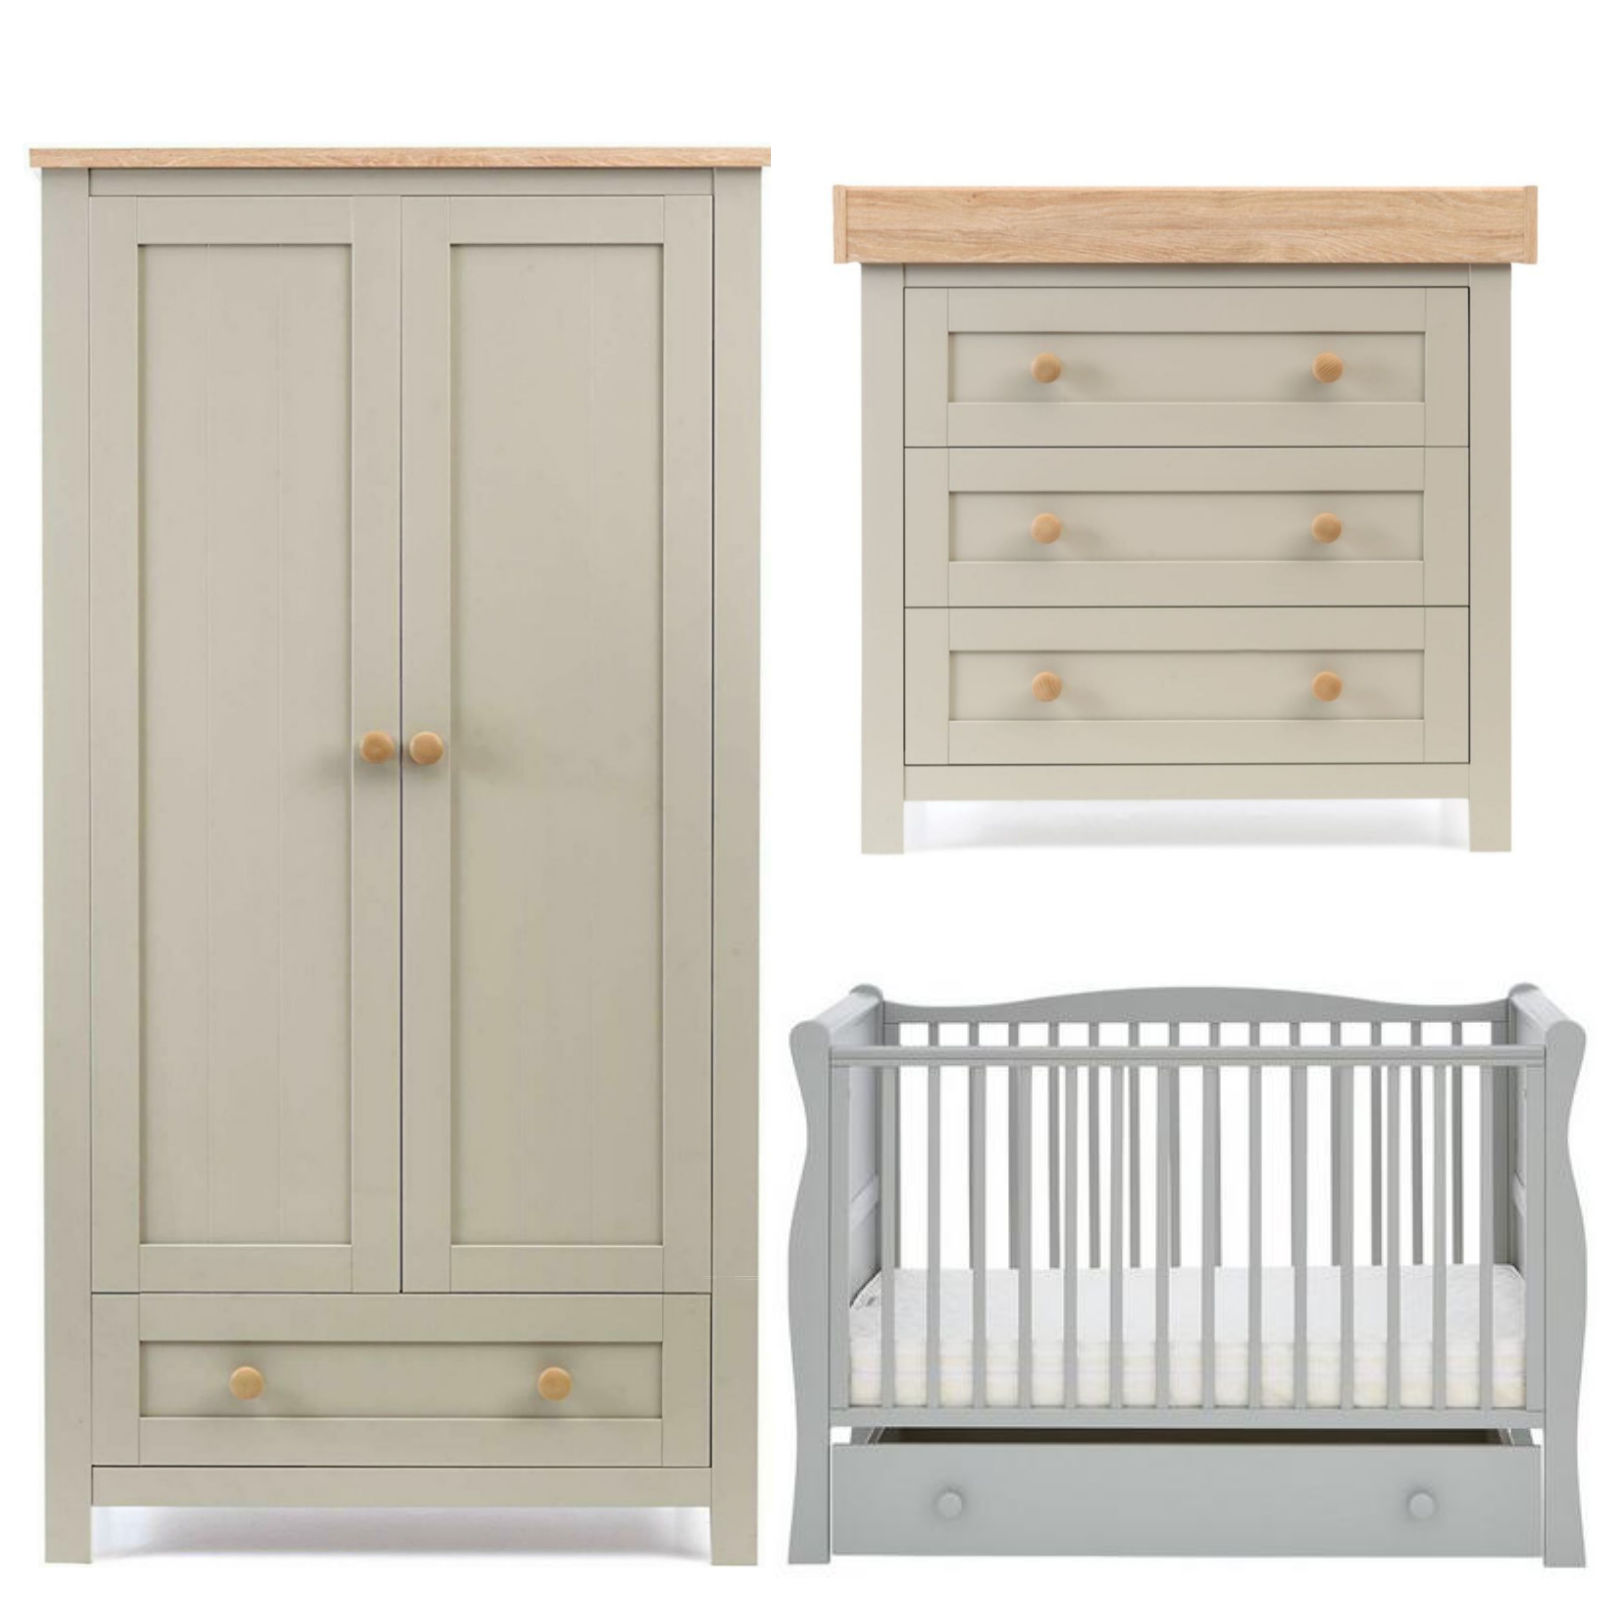 Mothercare Little Acorns Sleigh Cot 5 Piece Nursery Furniture Set